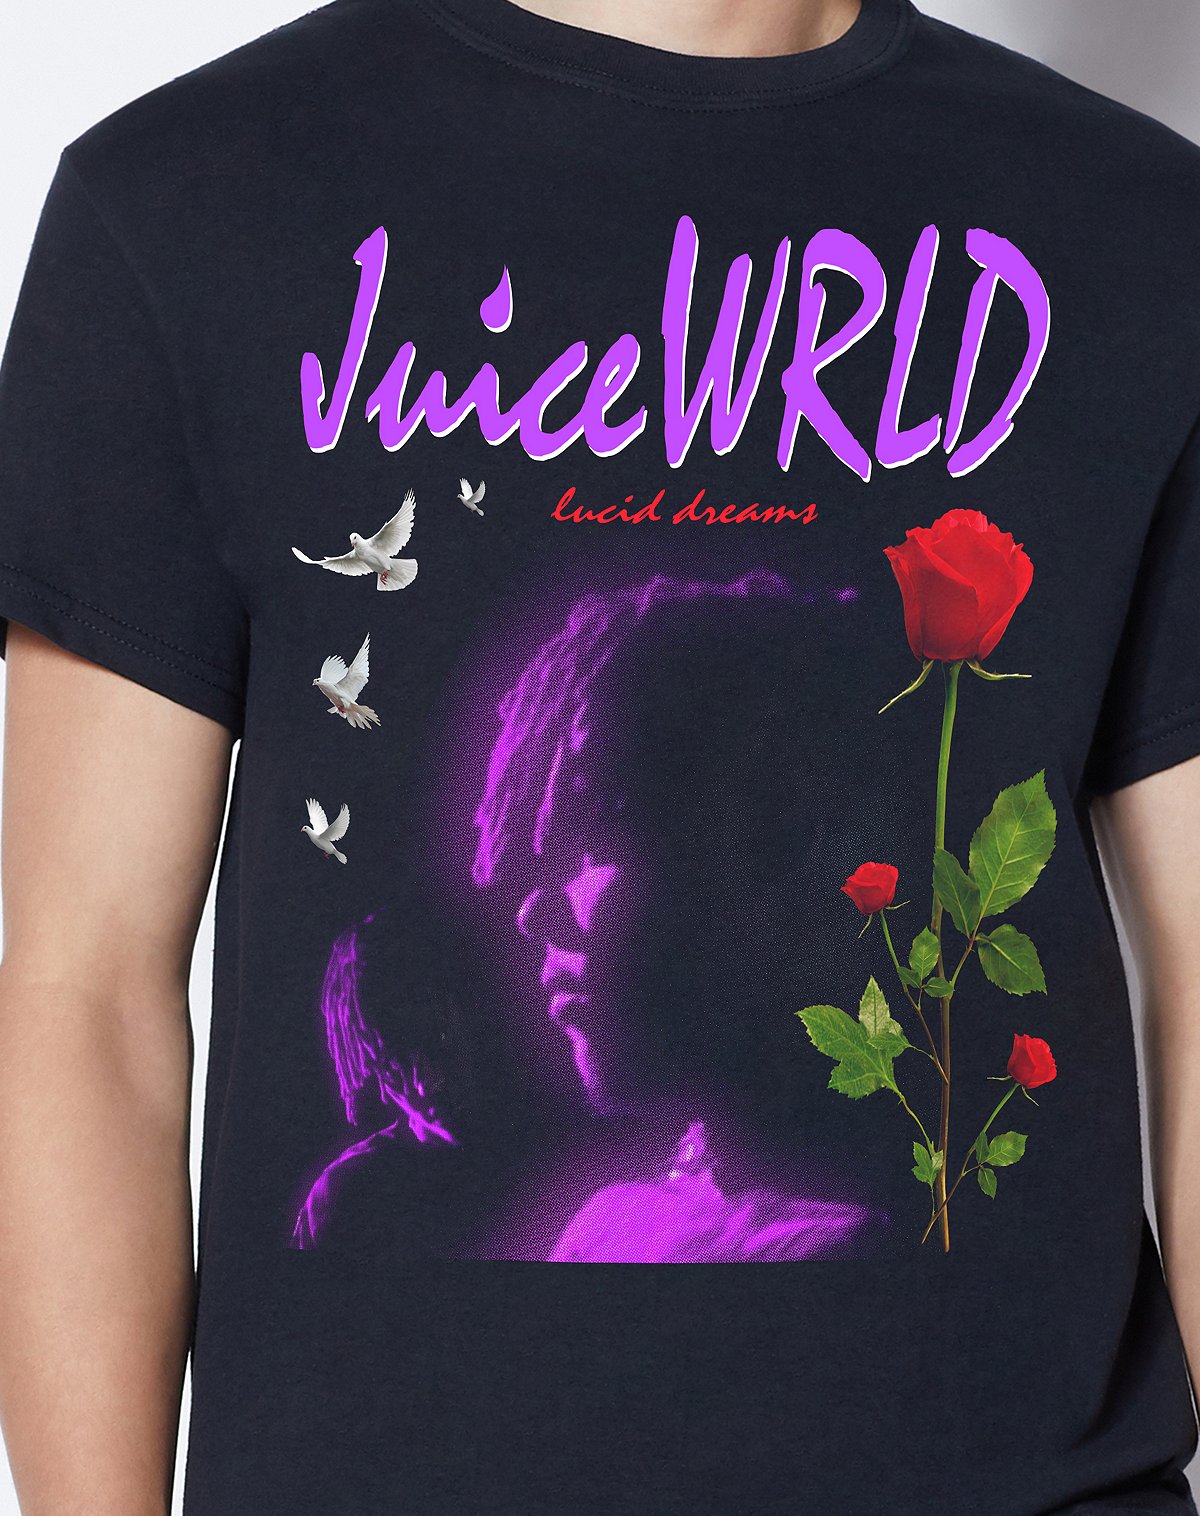 Lucid Rose Juice WRLD T Shirt - Club 999